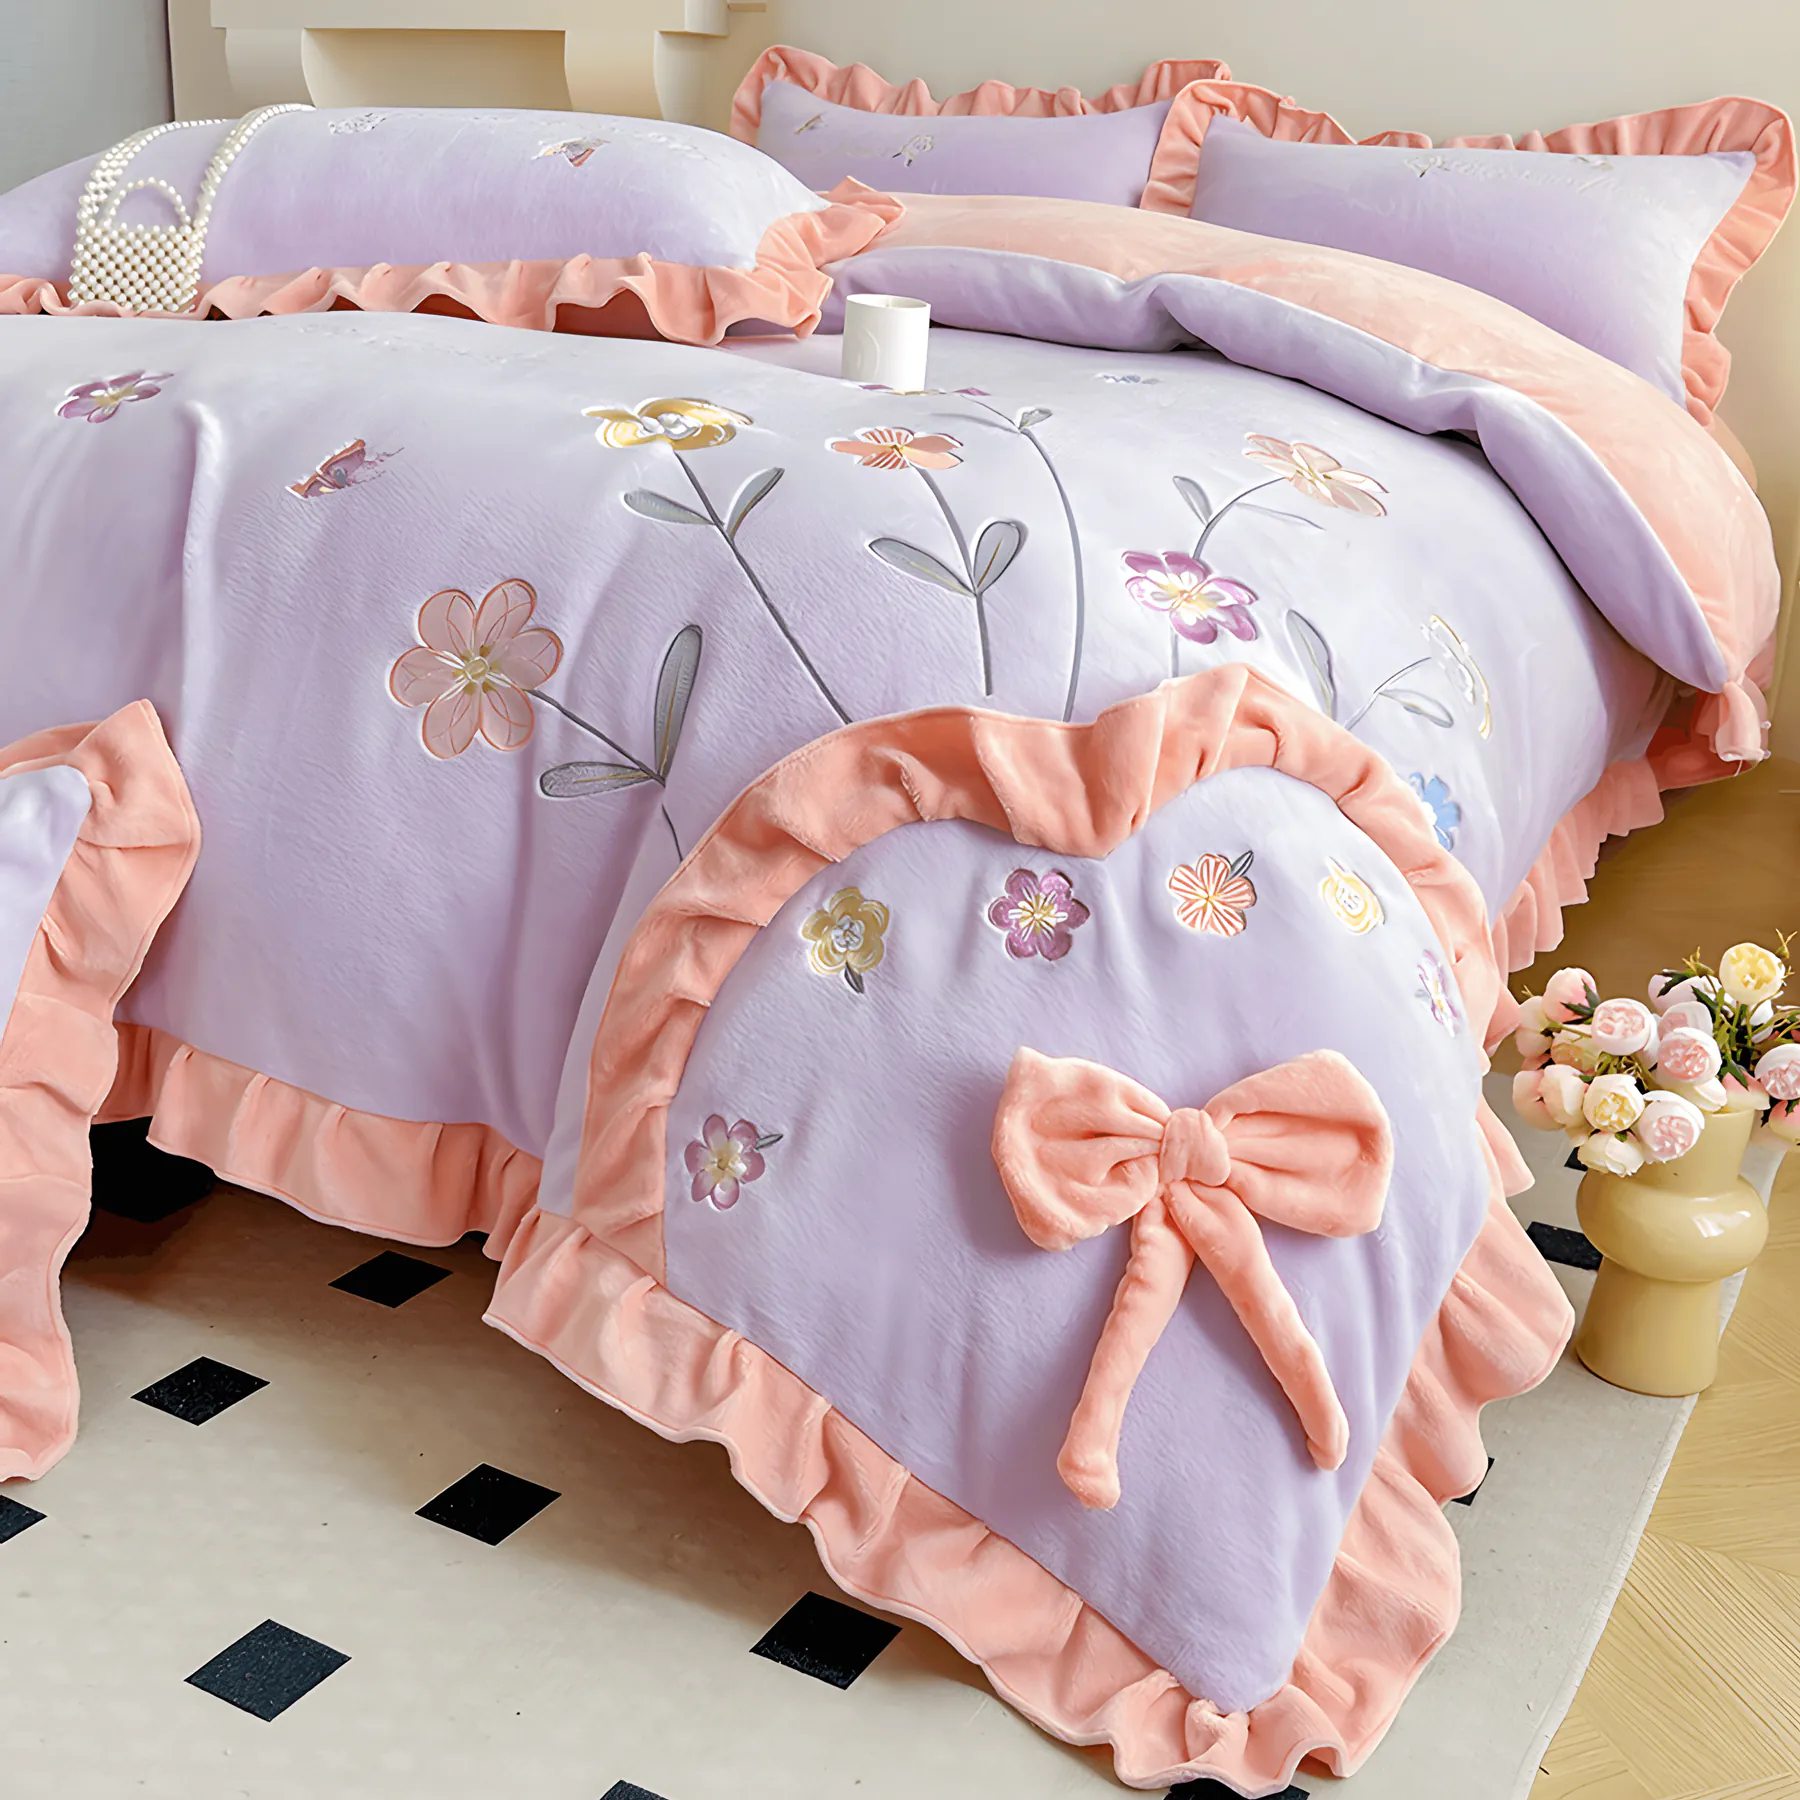 Romantic Milk Fiber Comforter Cover Bed Sheet Pillowcases 4 Pcs Set05